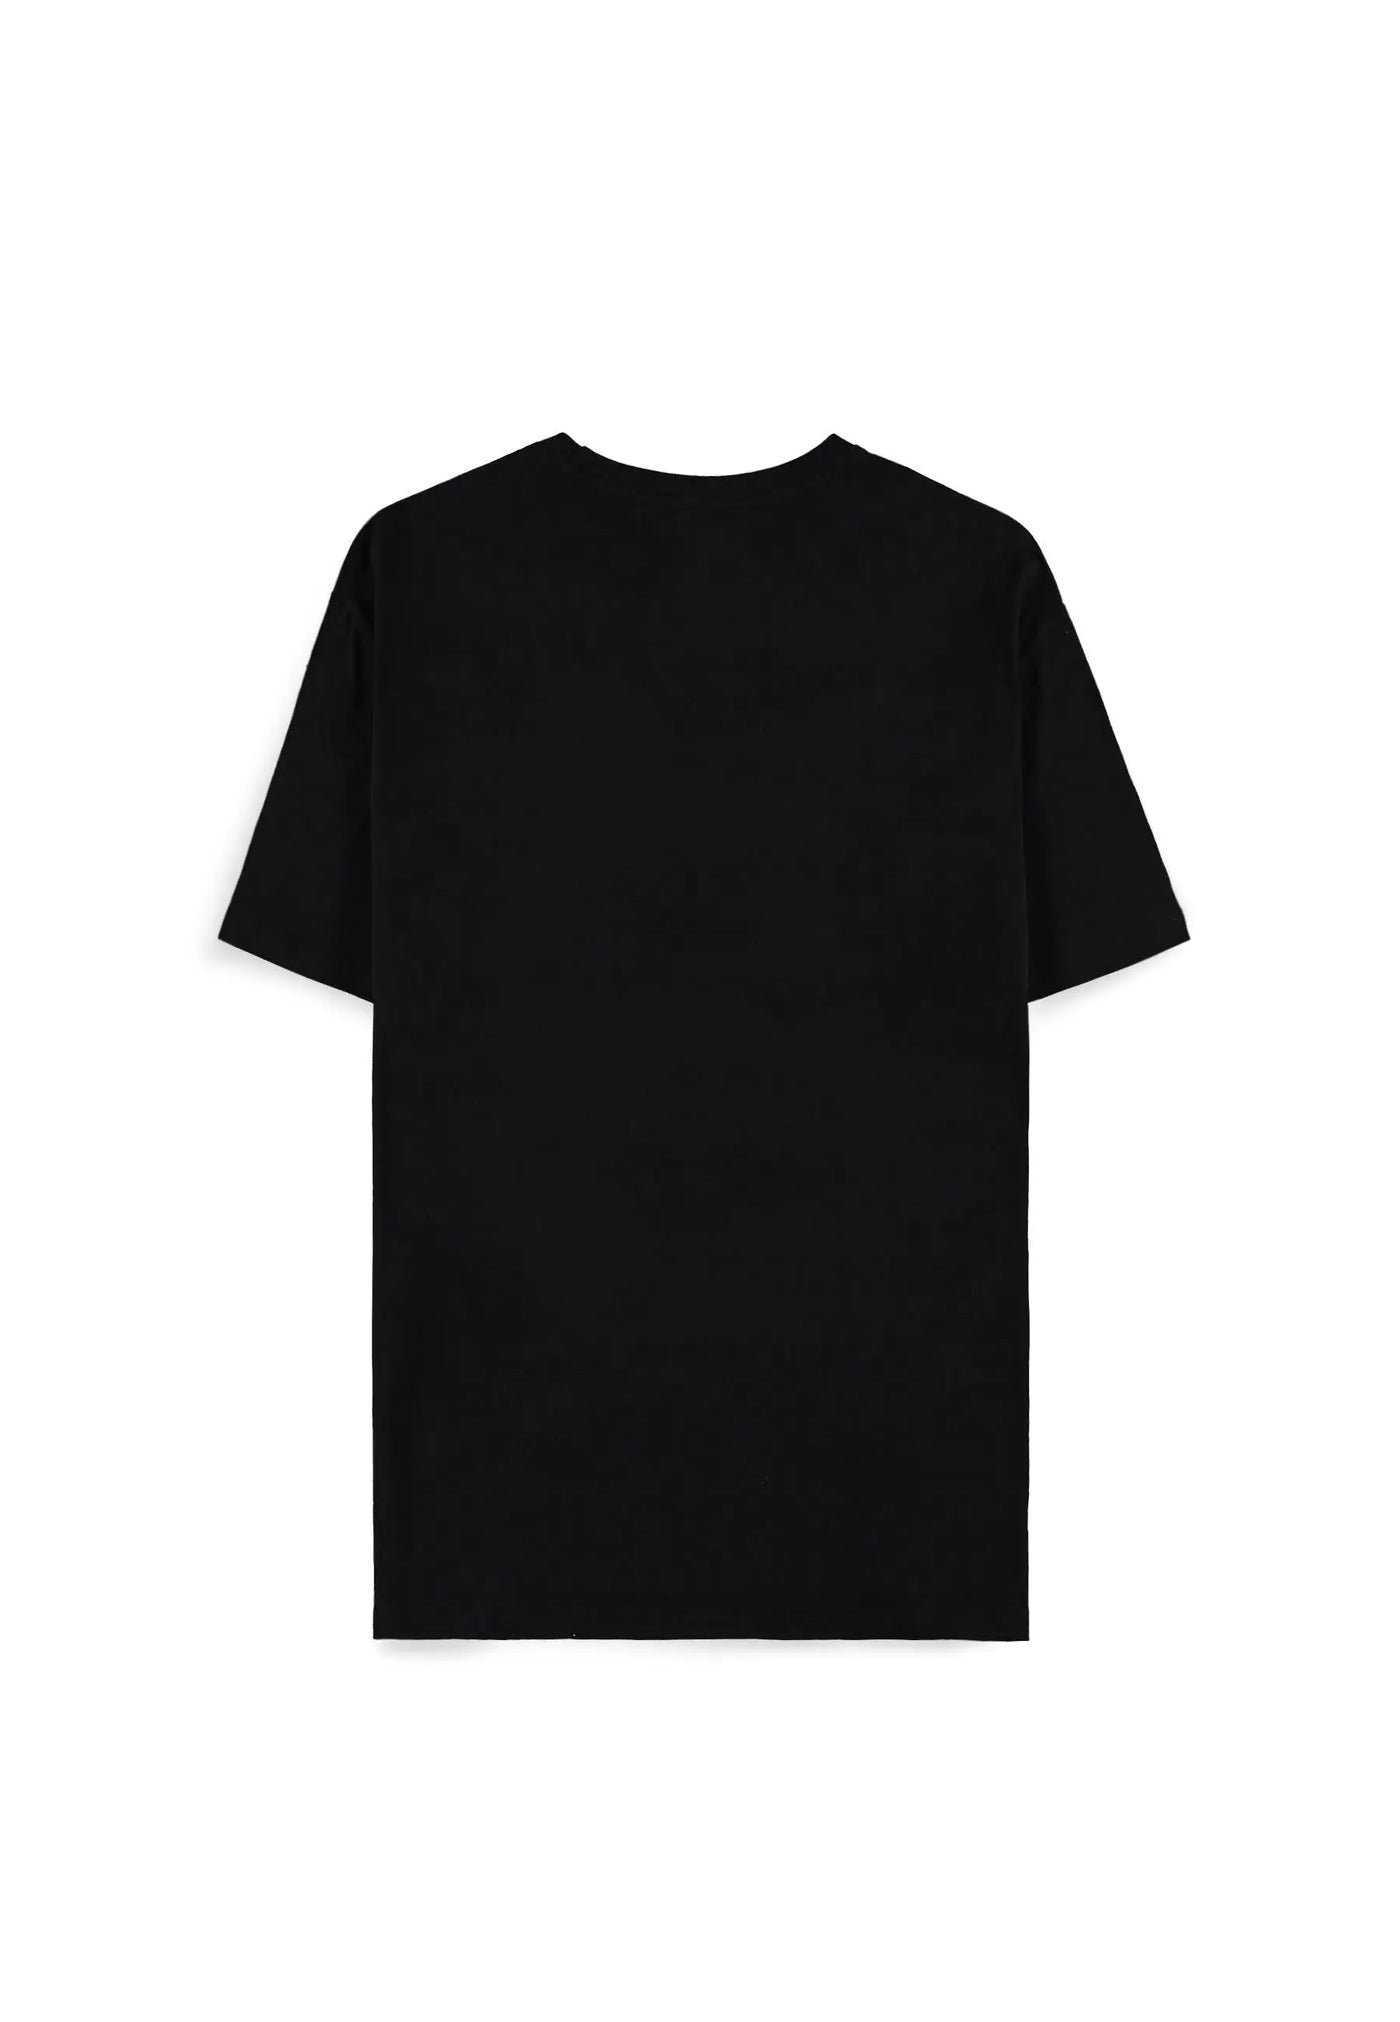 T-Shirt - GhostWire Tokyo -  Black